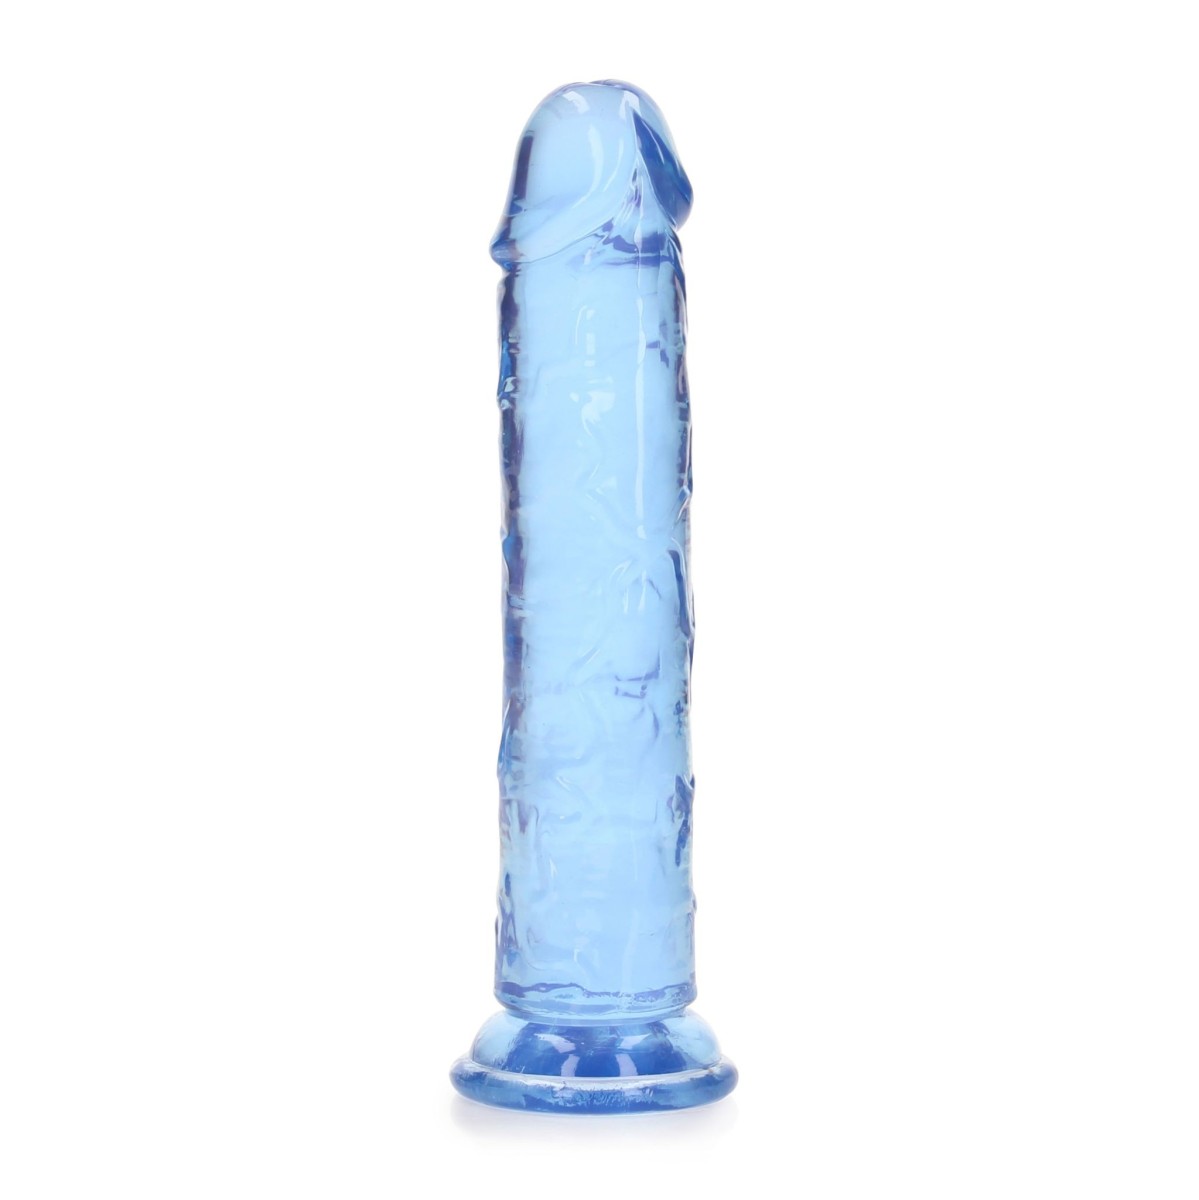 Gelové dildo RealRock Crystal Clear Realistic 7″ modré, dildo s přísavkou 20 x 3,8 cm